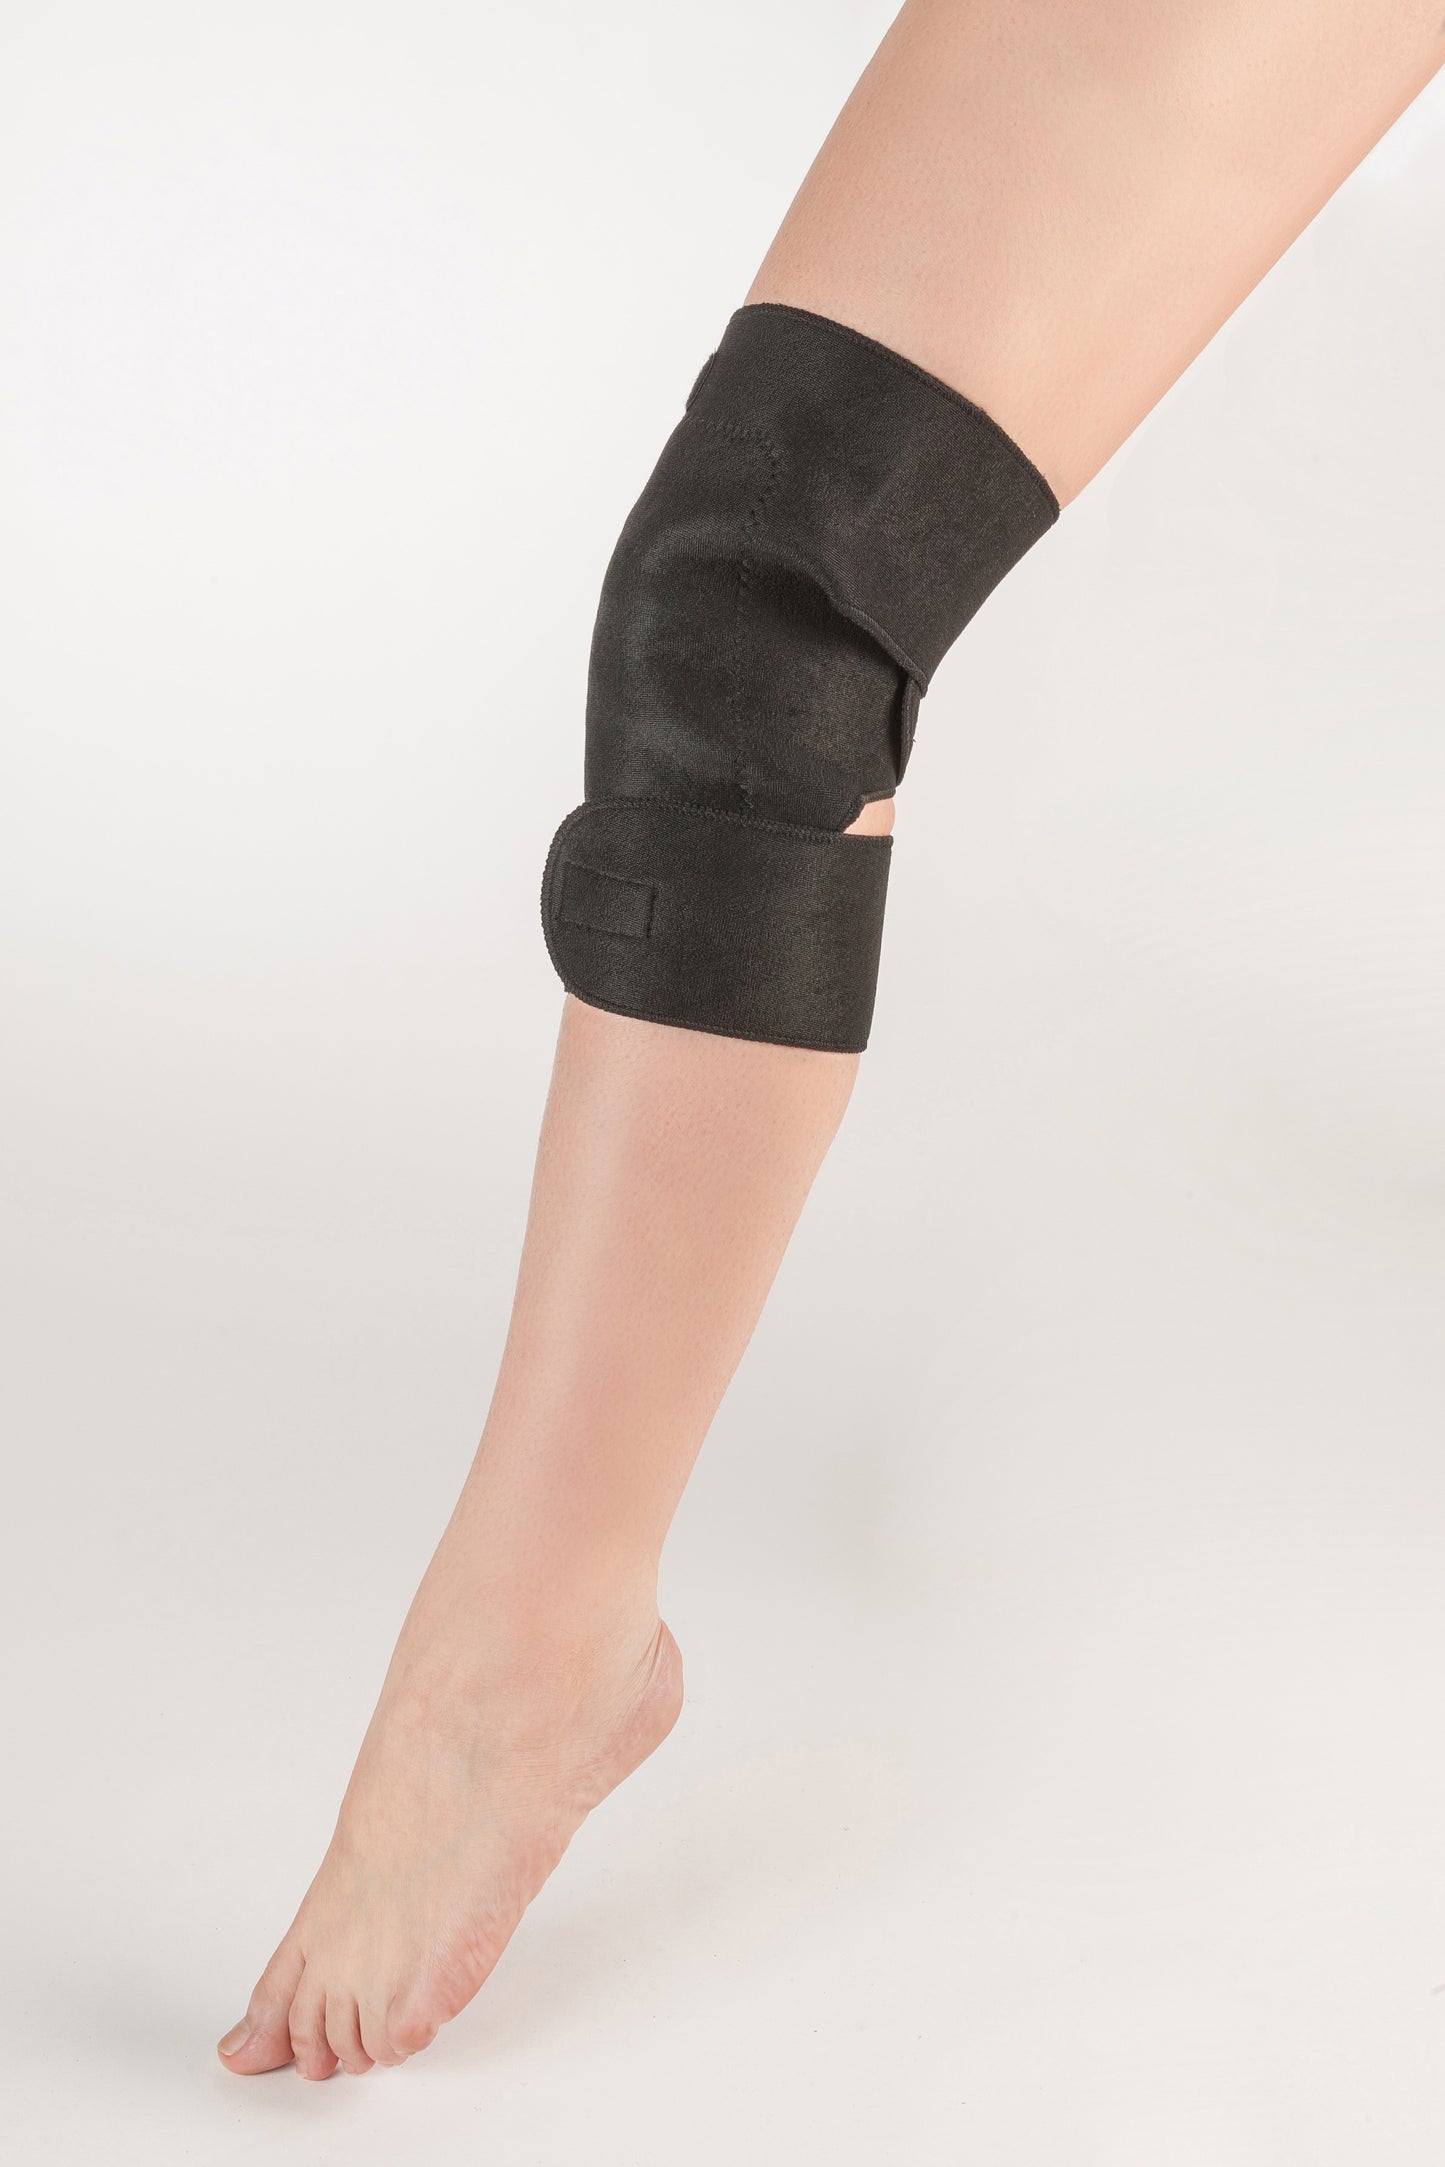 Kniebandage schwarz mit Magnet -Turmalin B-08